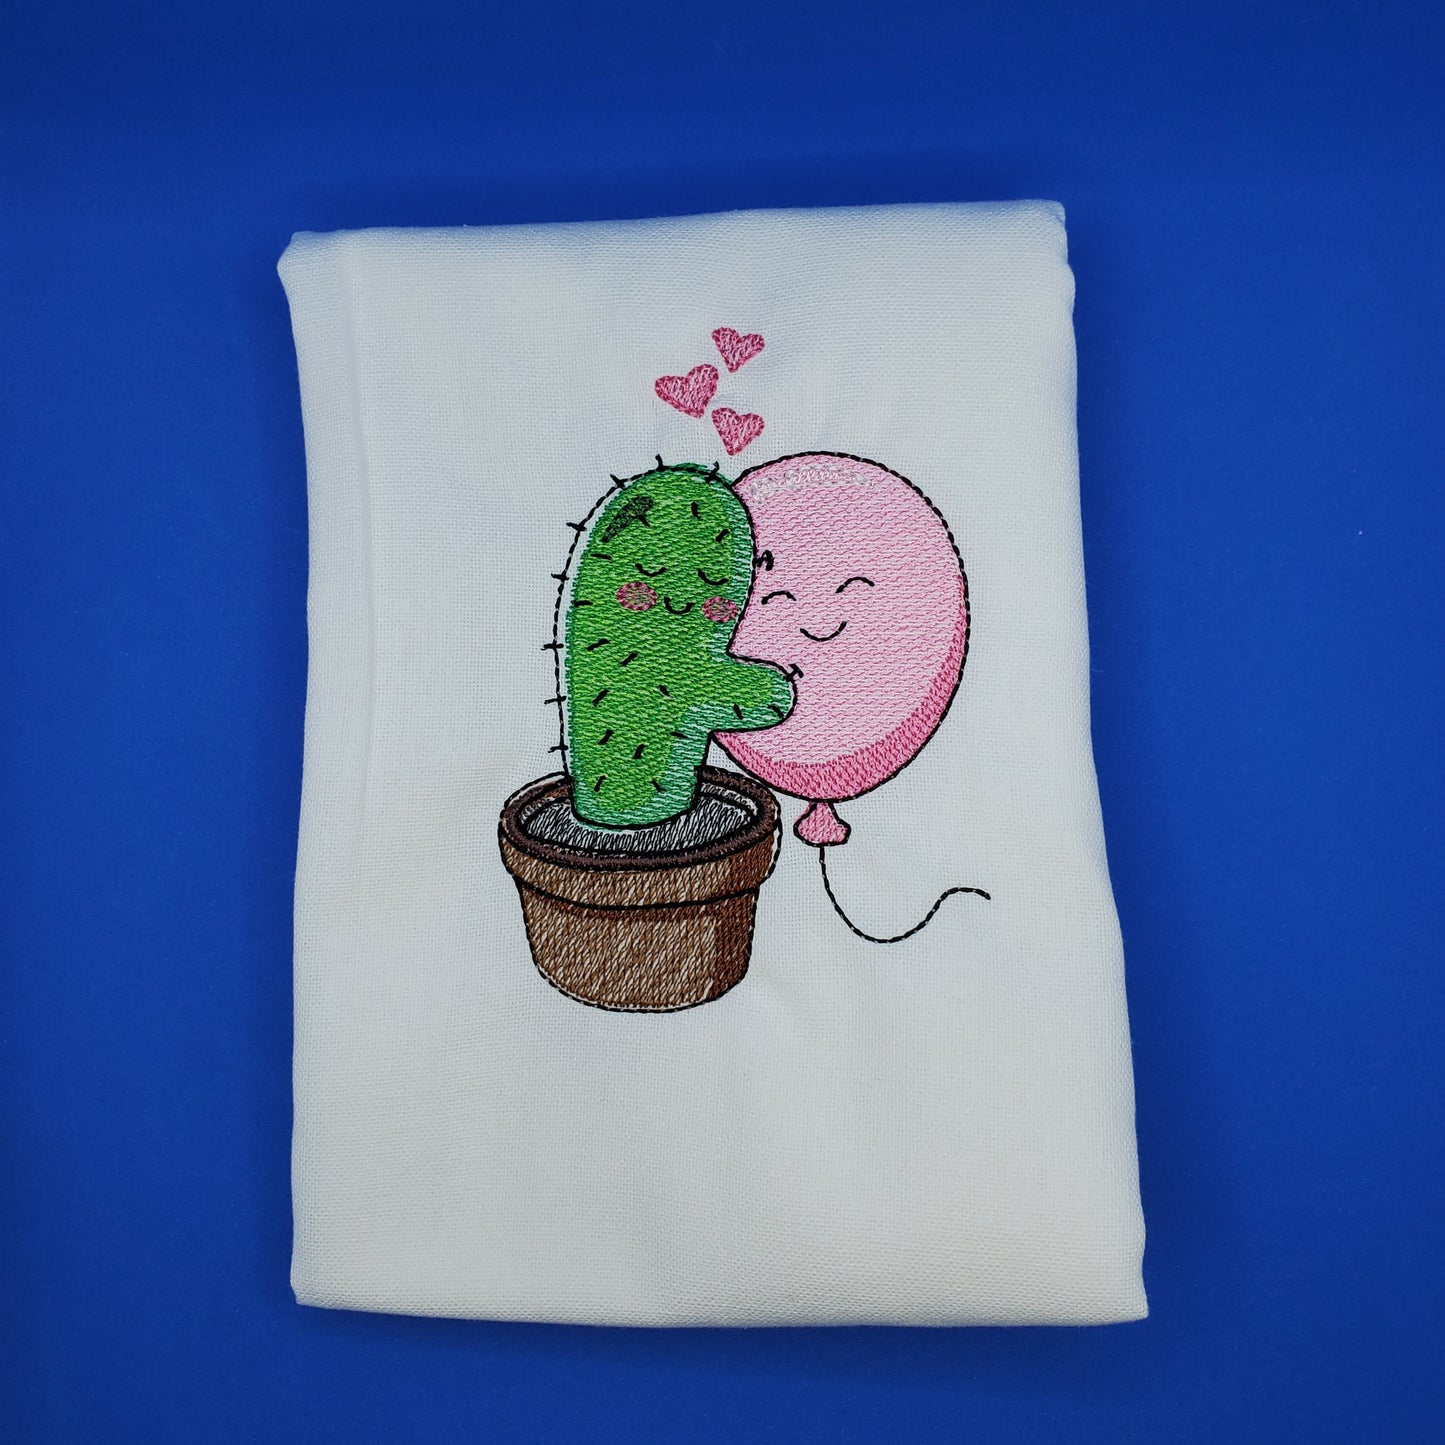 Cactus and Balloon Hug on flat weave 100% cotton towel